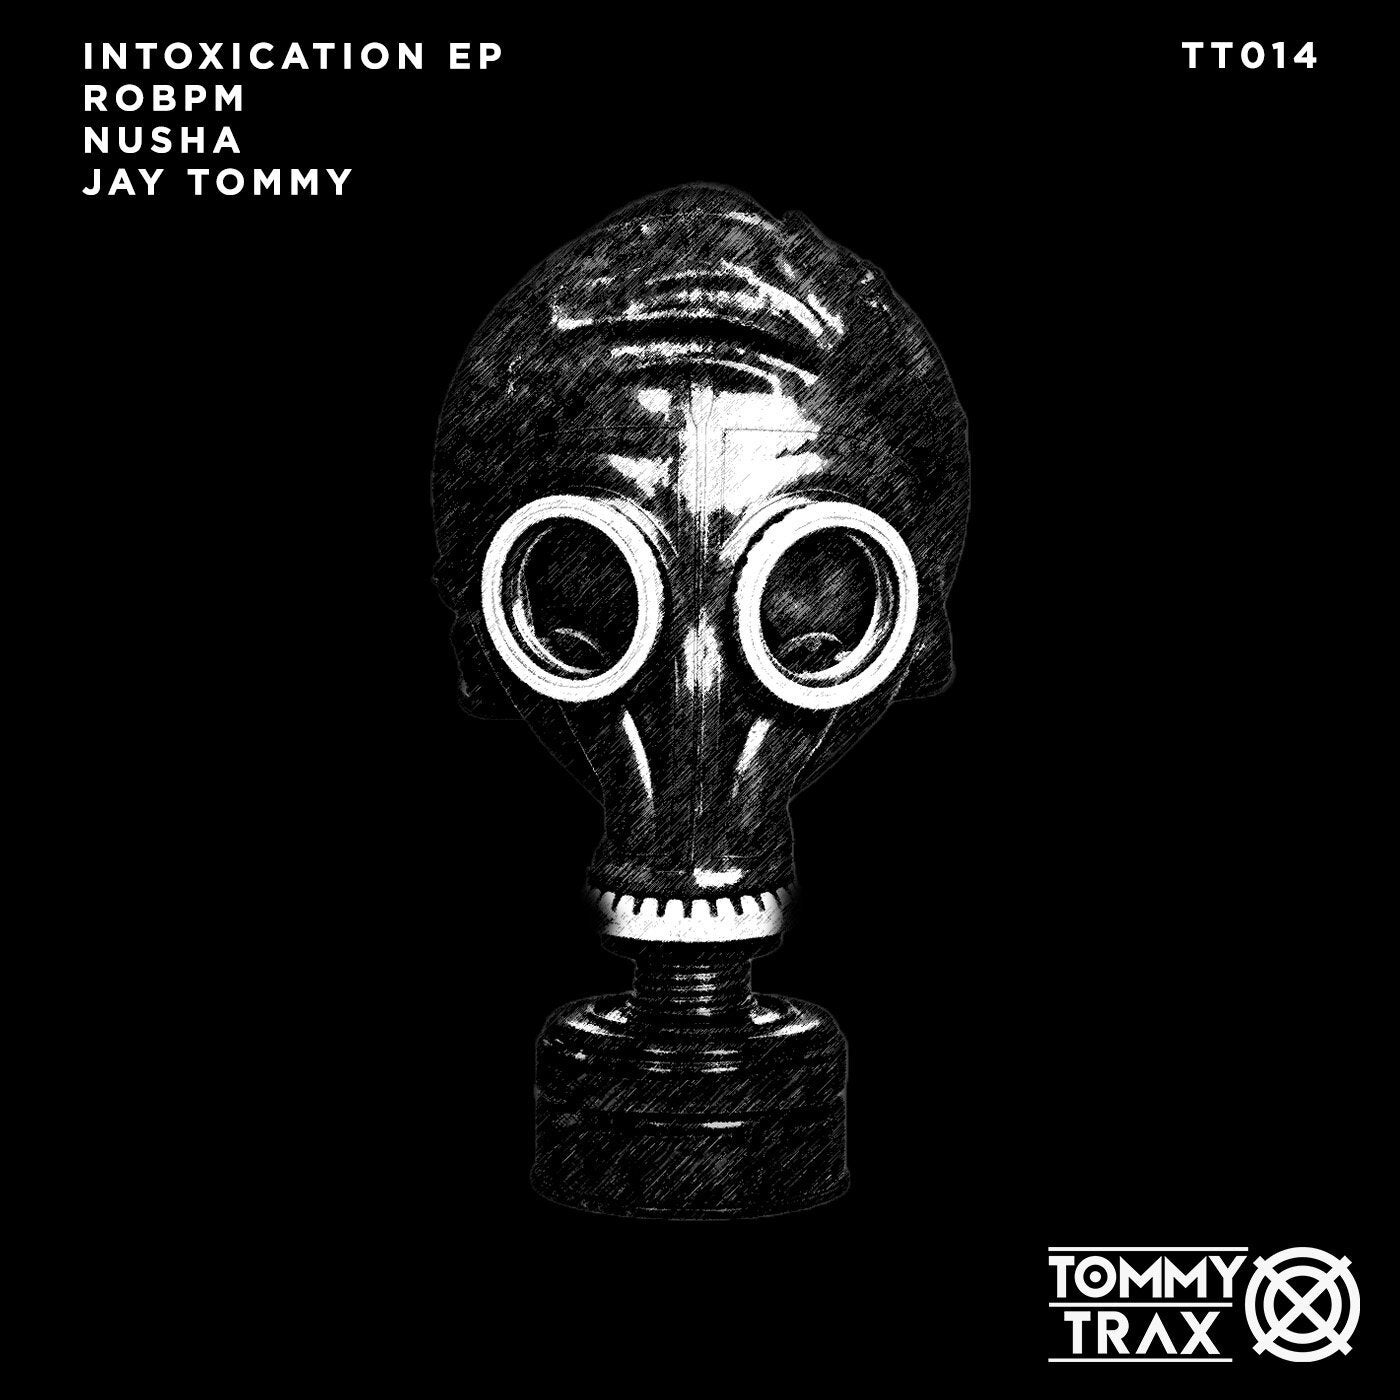 Intoxication EP